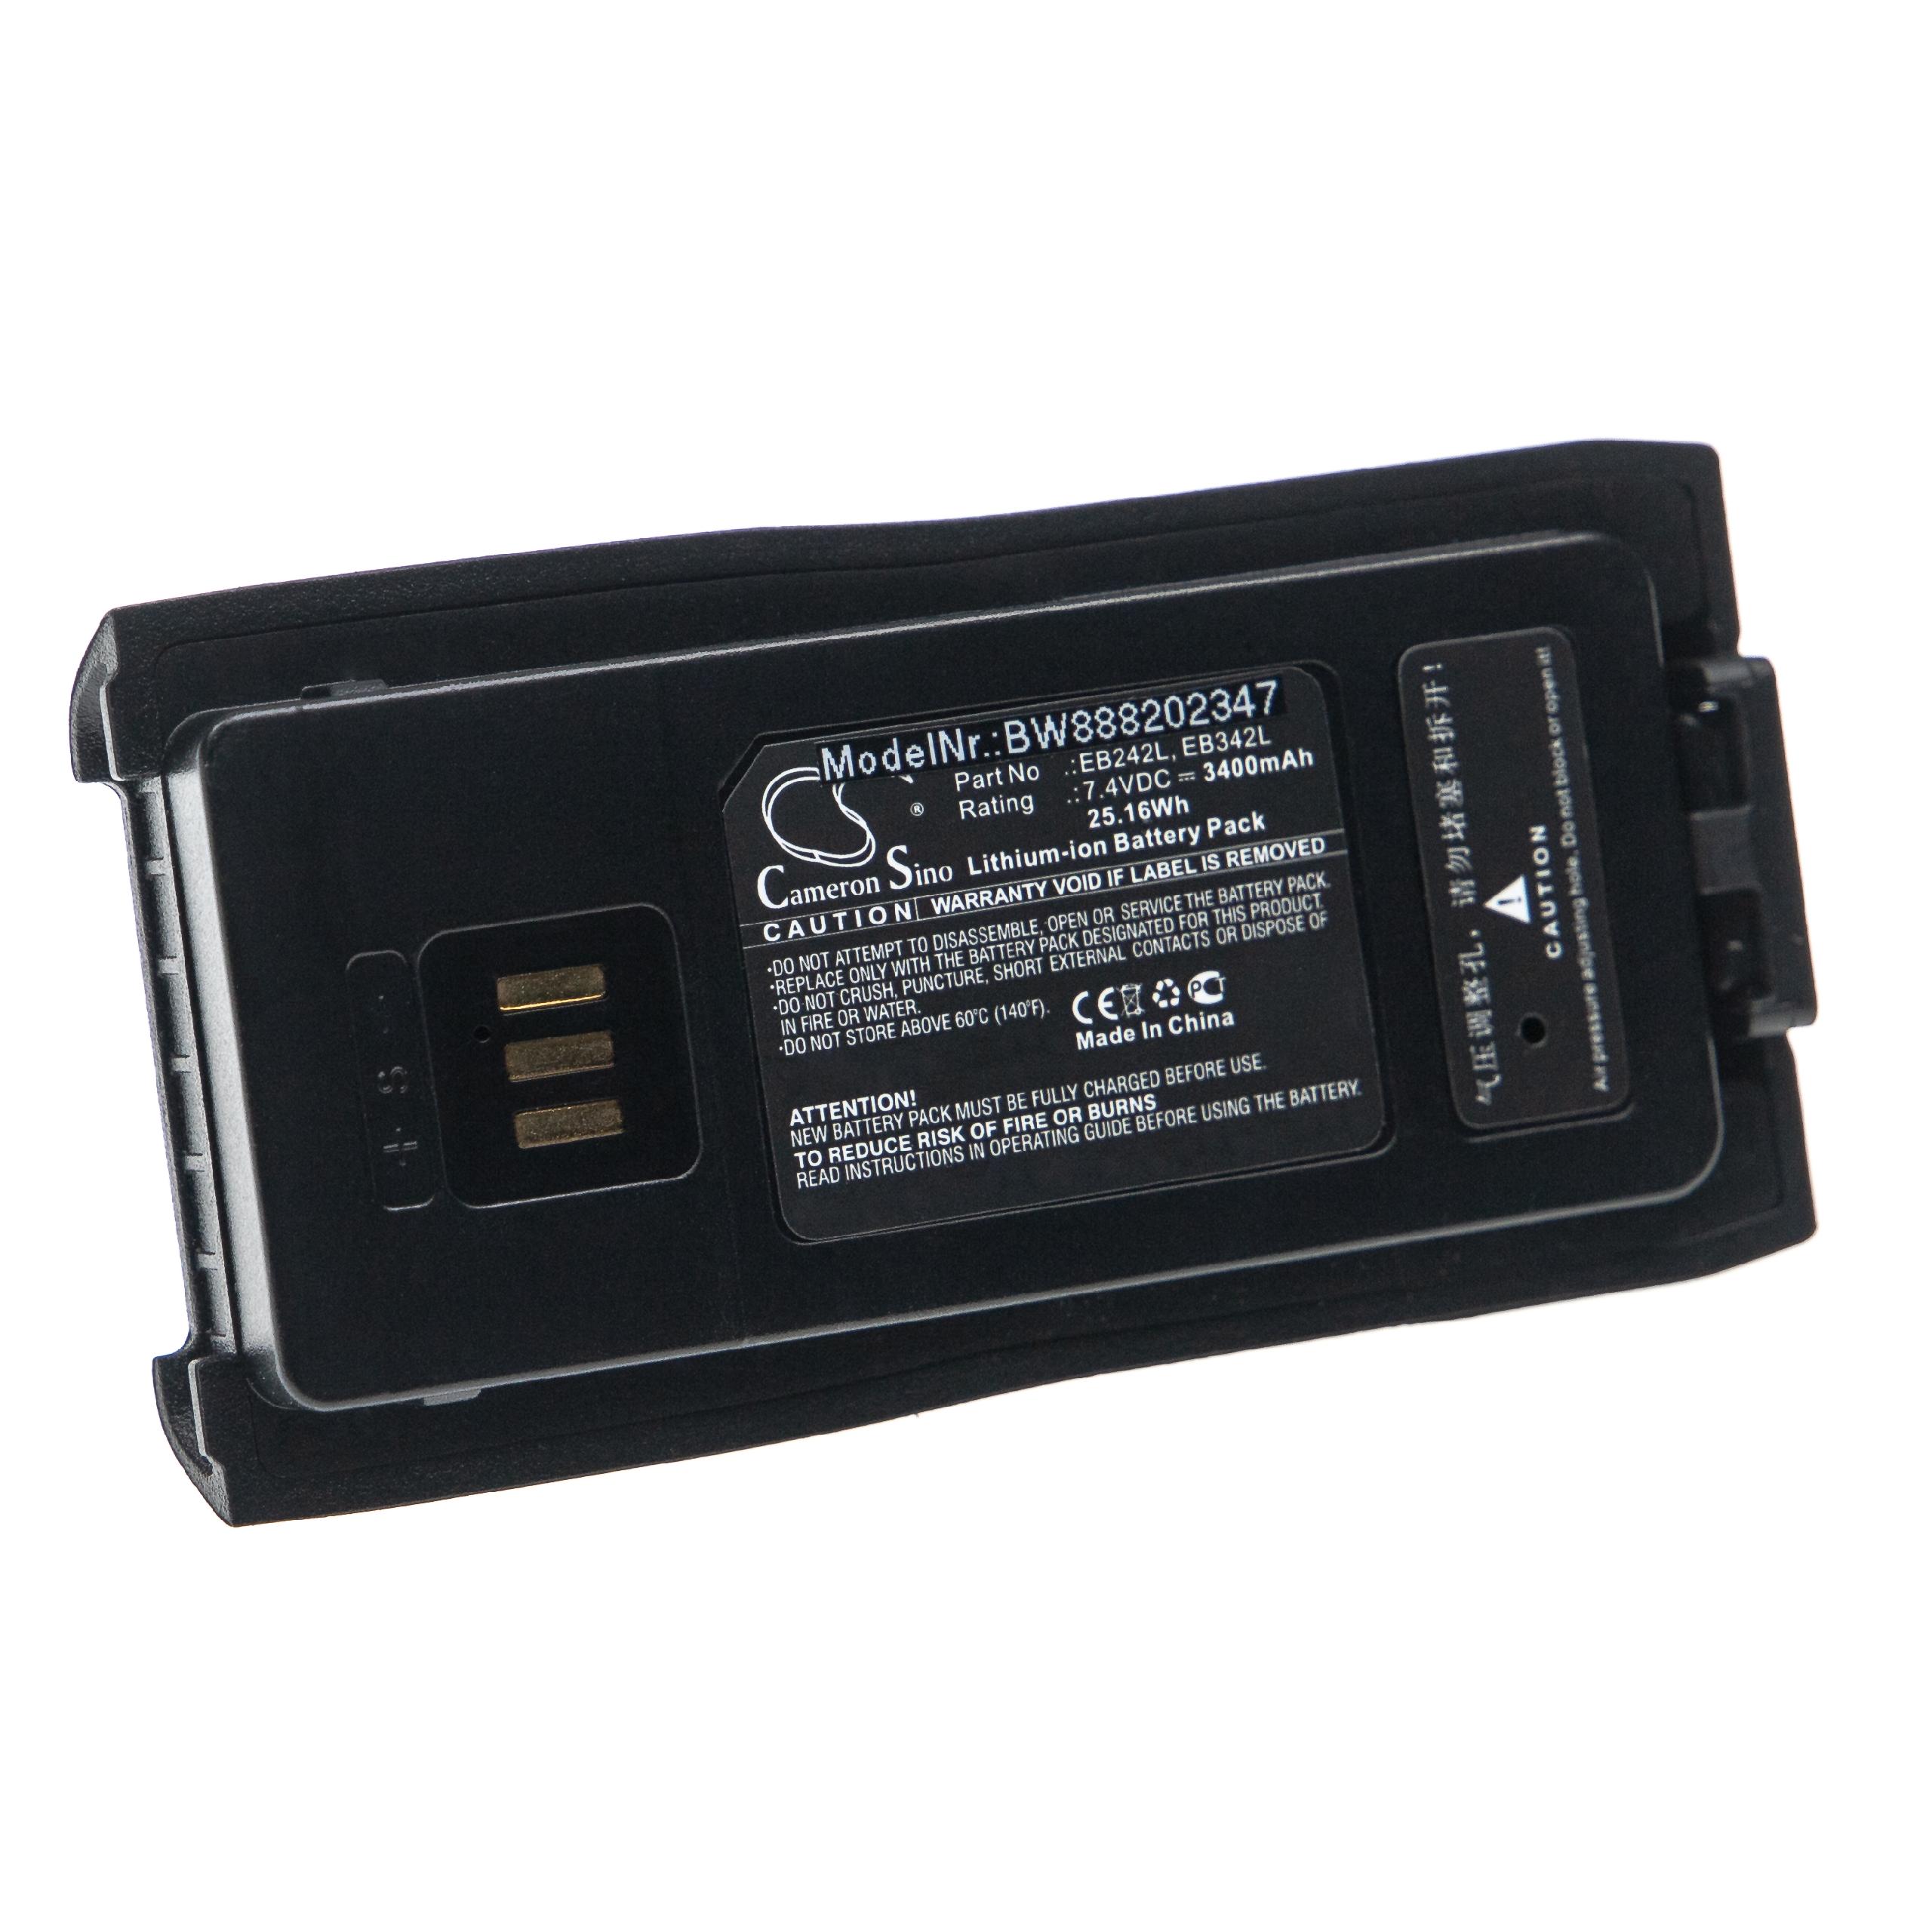 Batterie remplace Excera EB242L, EB342L pour radio talkie-walkie - 3400mAh 7,4V Li-ion